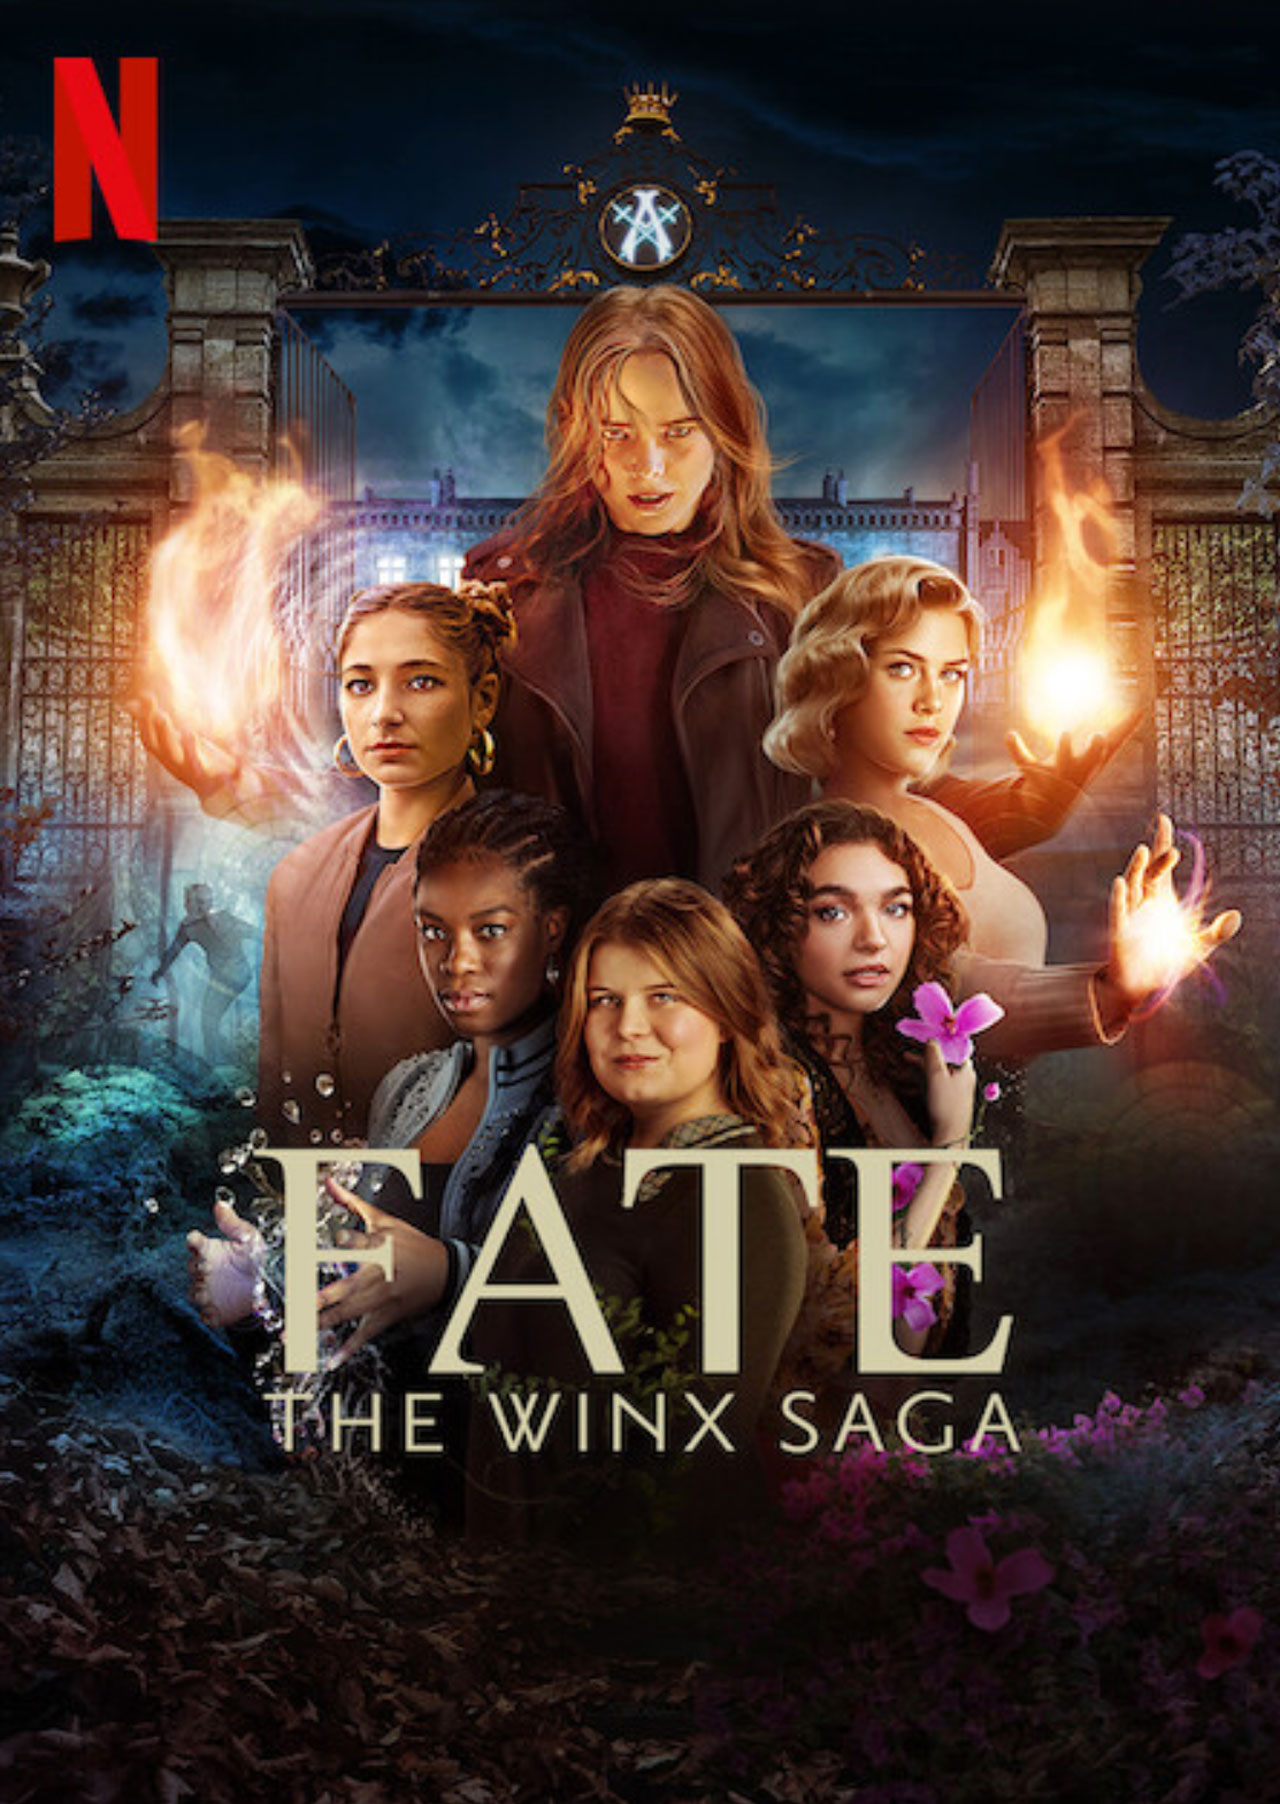 Fate The Winx Saga 2021 Wallpapers